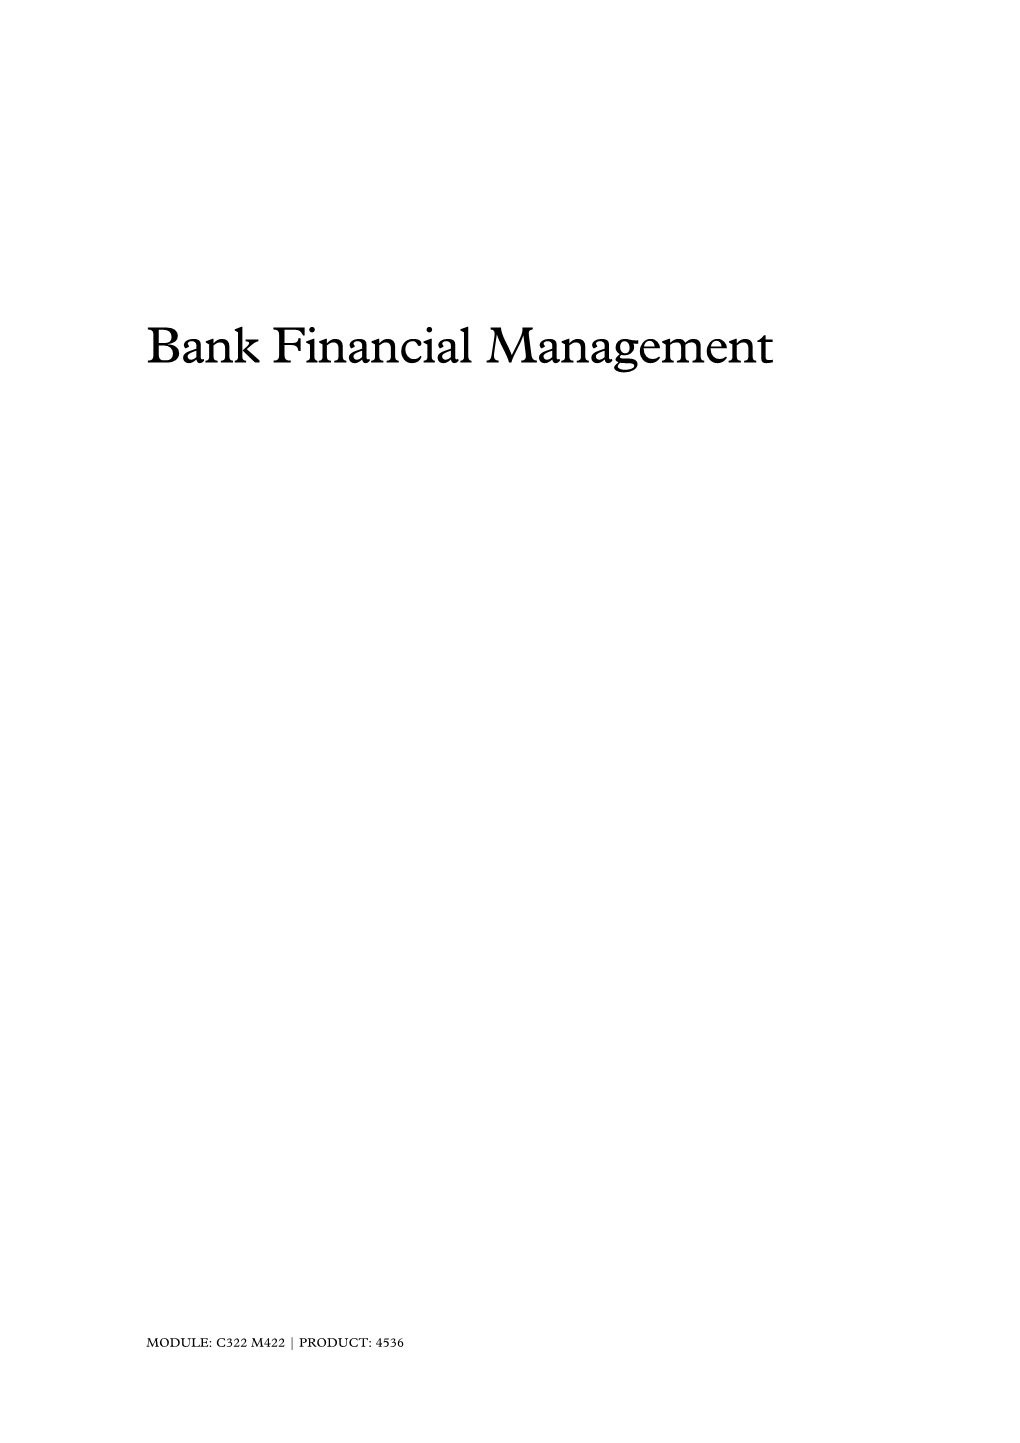 Bank Financial Management Sample